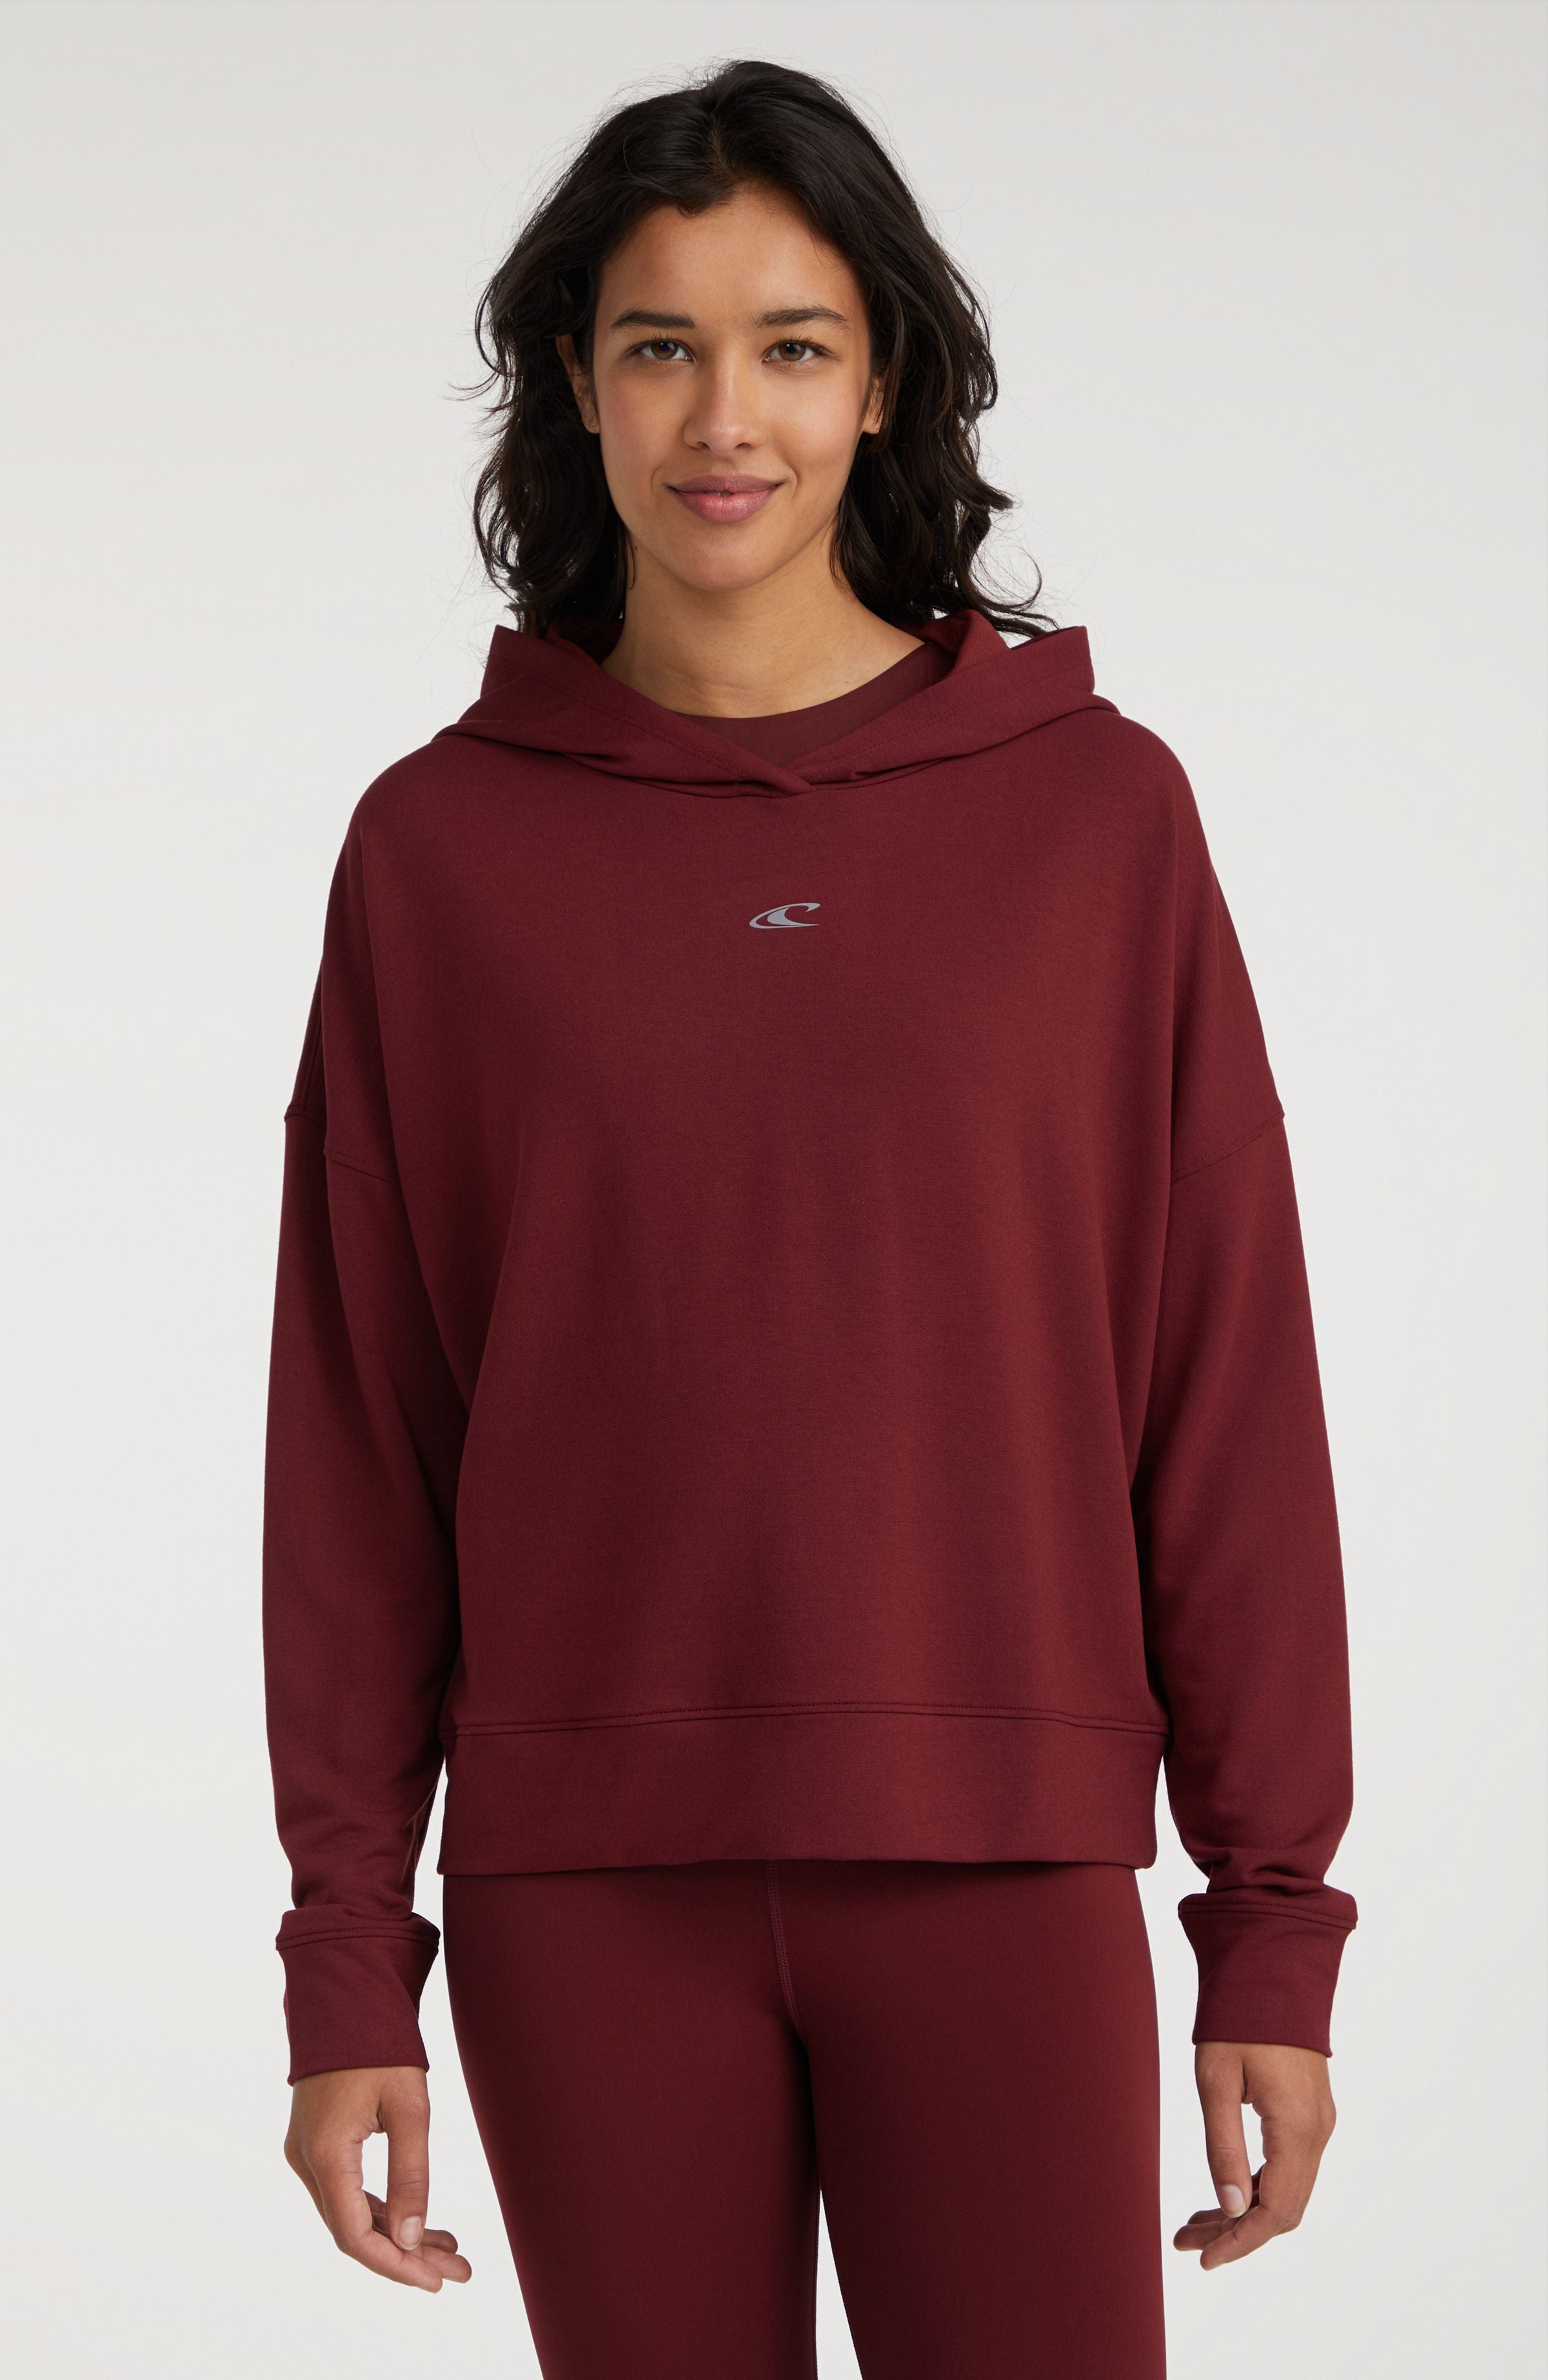  Onlypuff 3X Hoodies For Women Tie Dye Sweatshirts